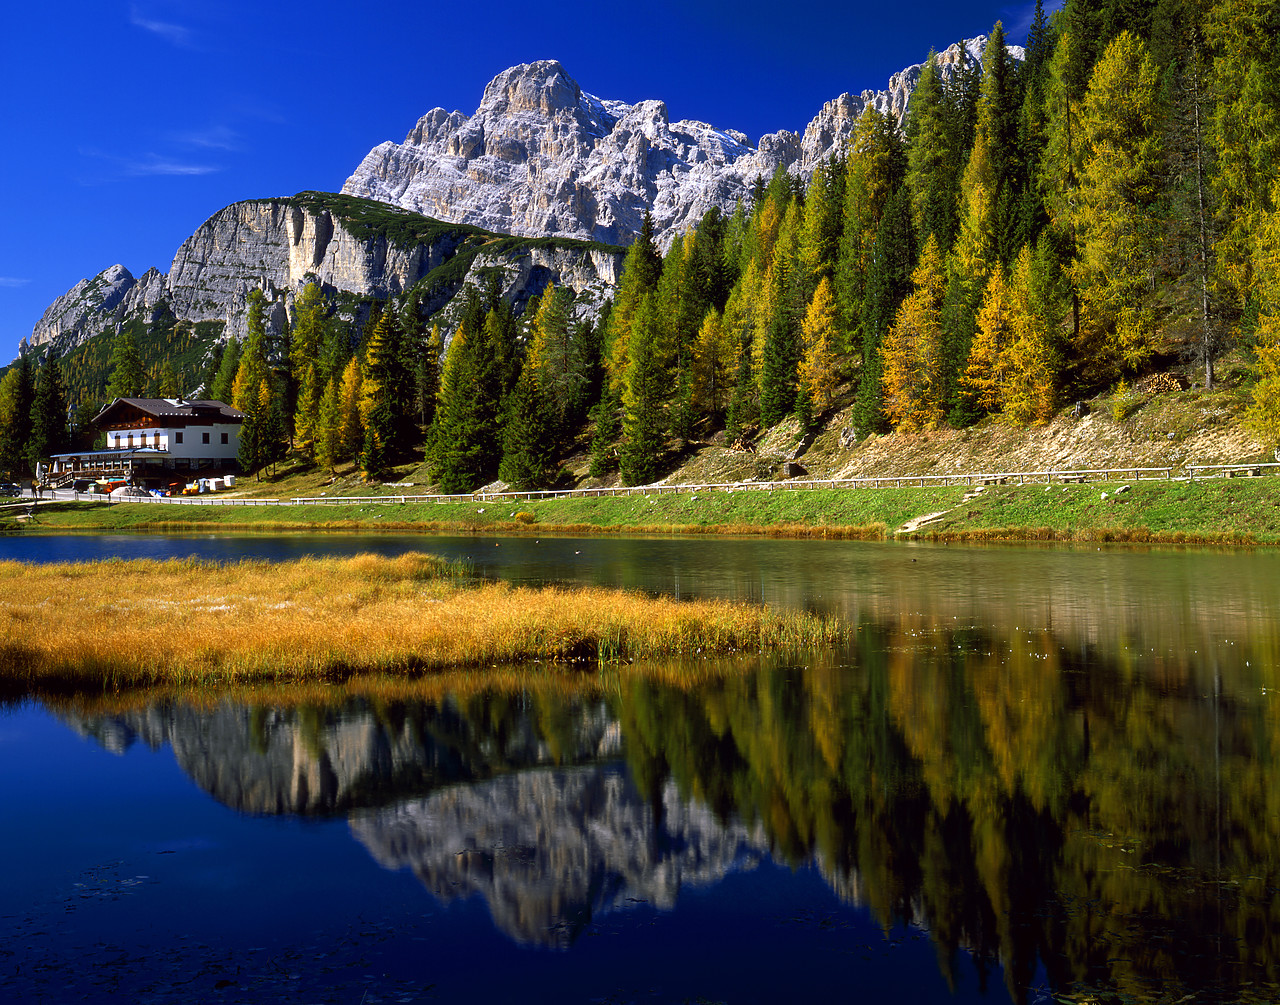 #060608-5 - Lake Antorno Reflections, Dolomites, Italy